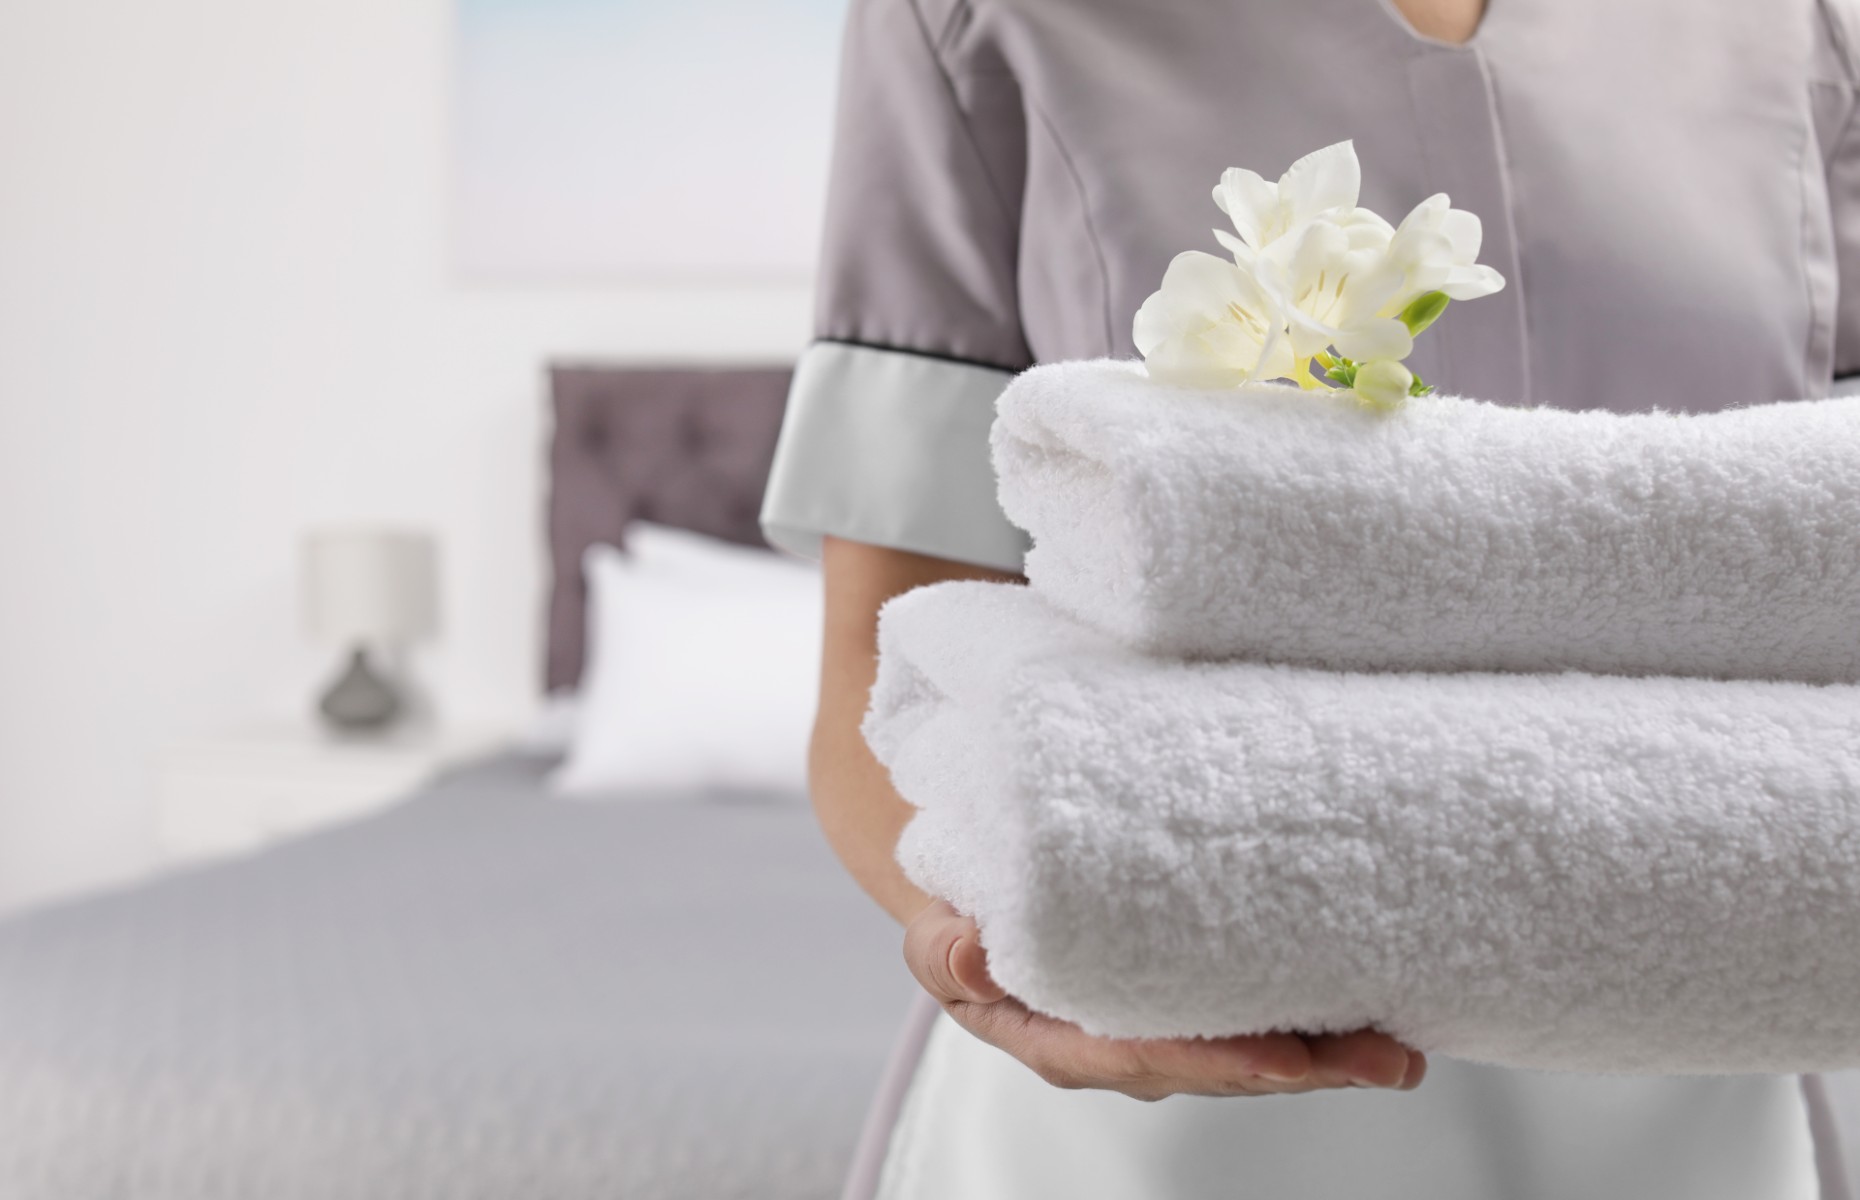 Hotel housekeeping (Image: New Africa/Shutterstock)